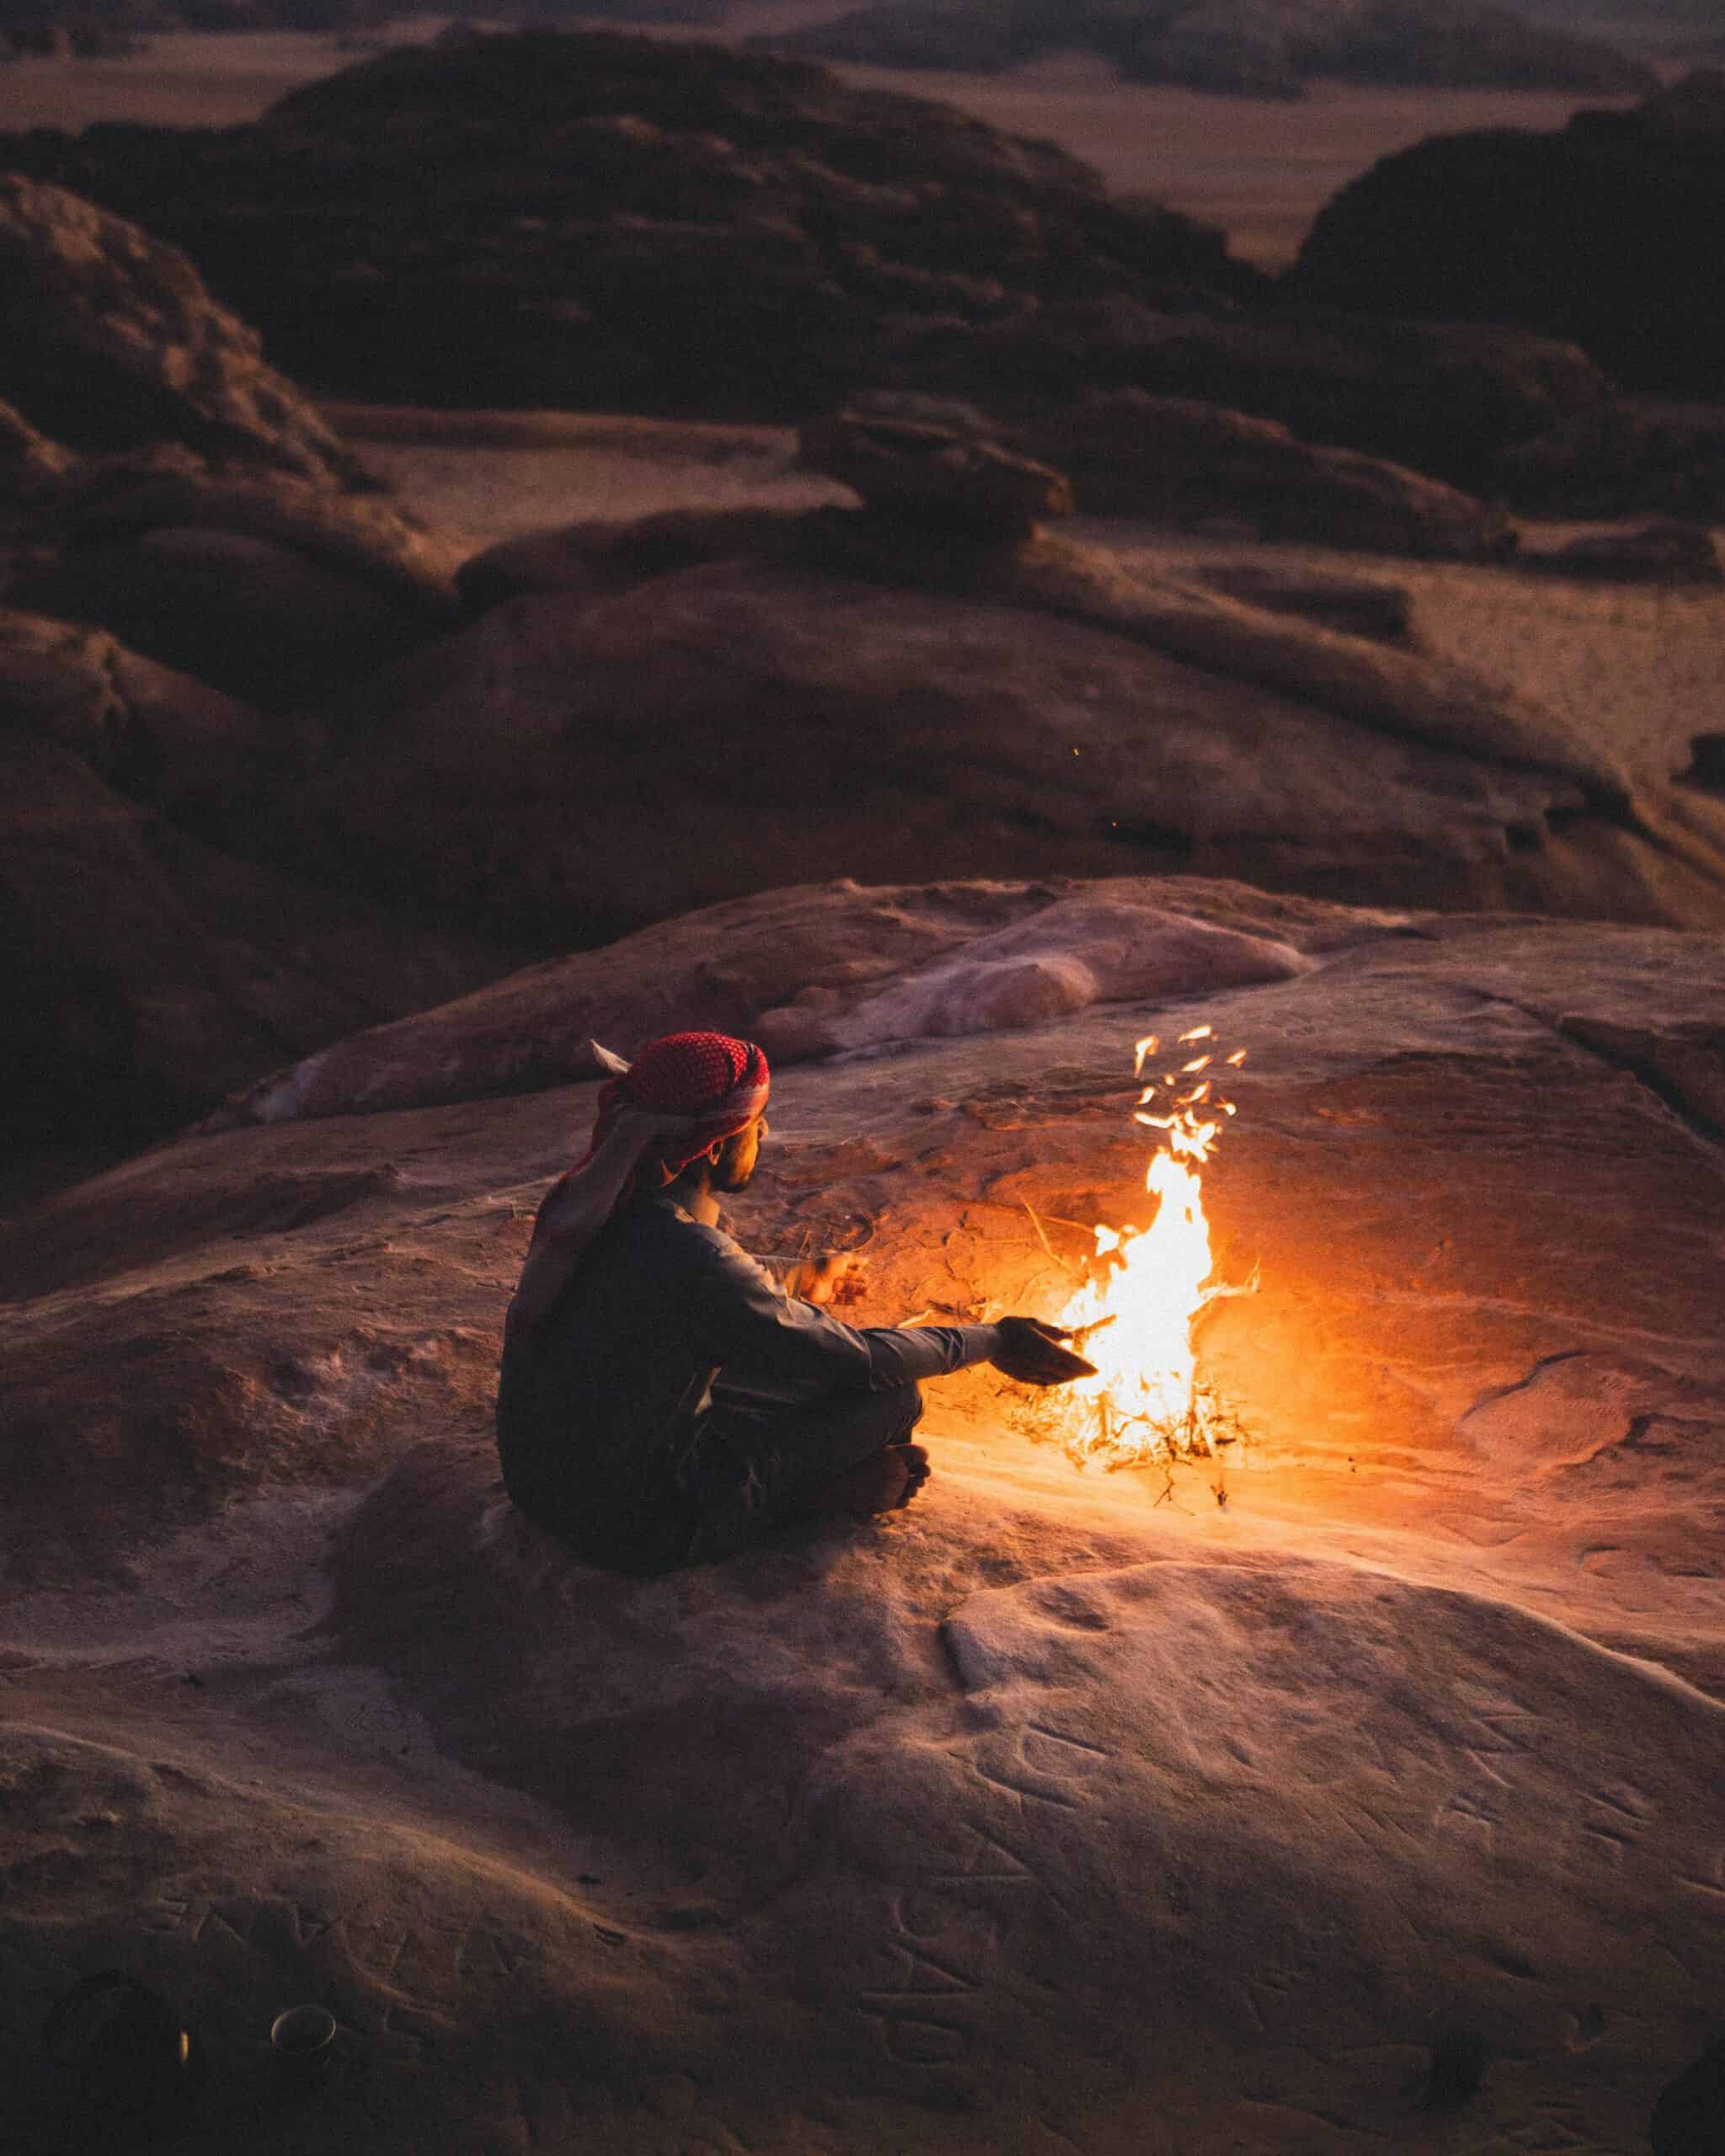 arab man in desert, campfire, mindfulness in islam